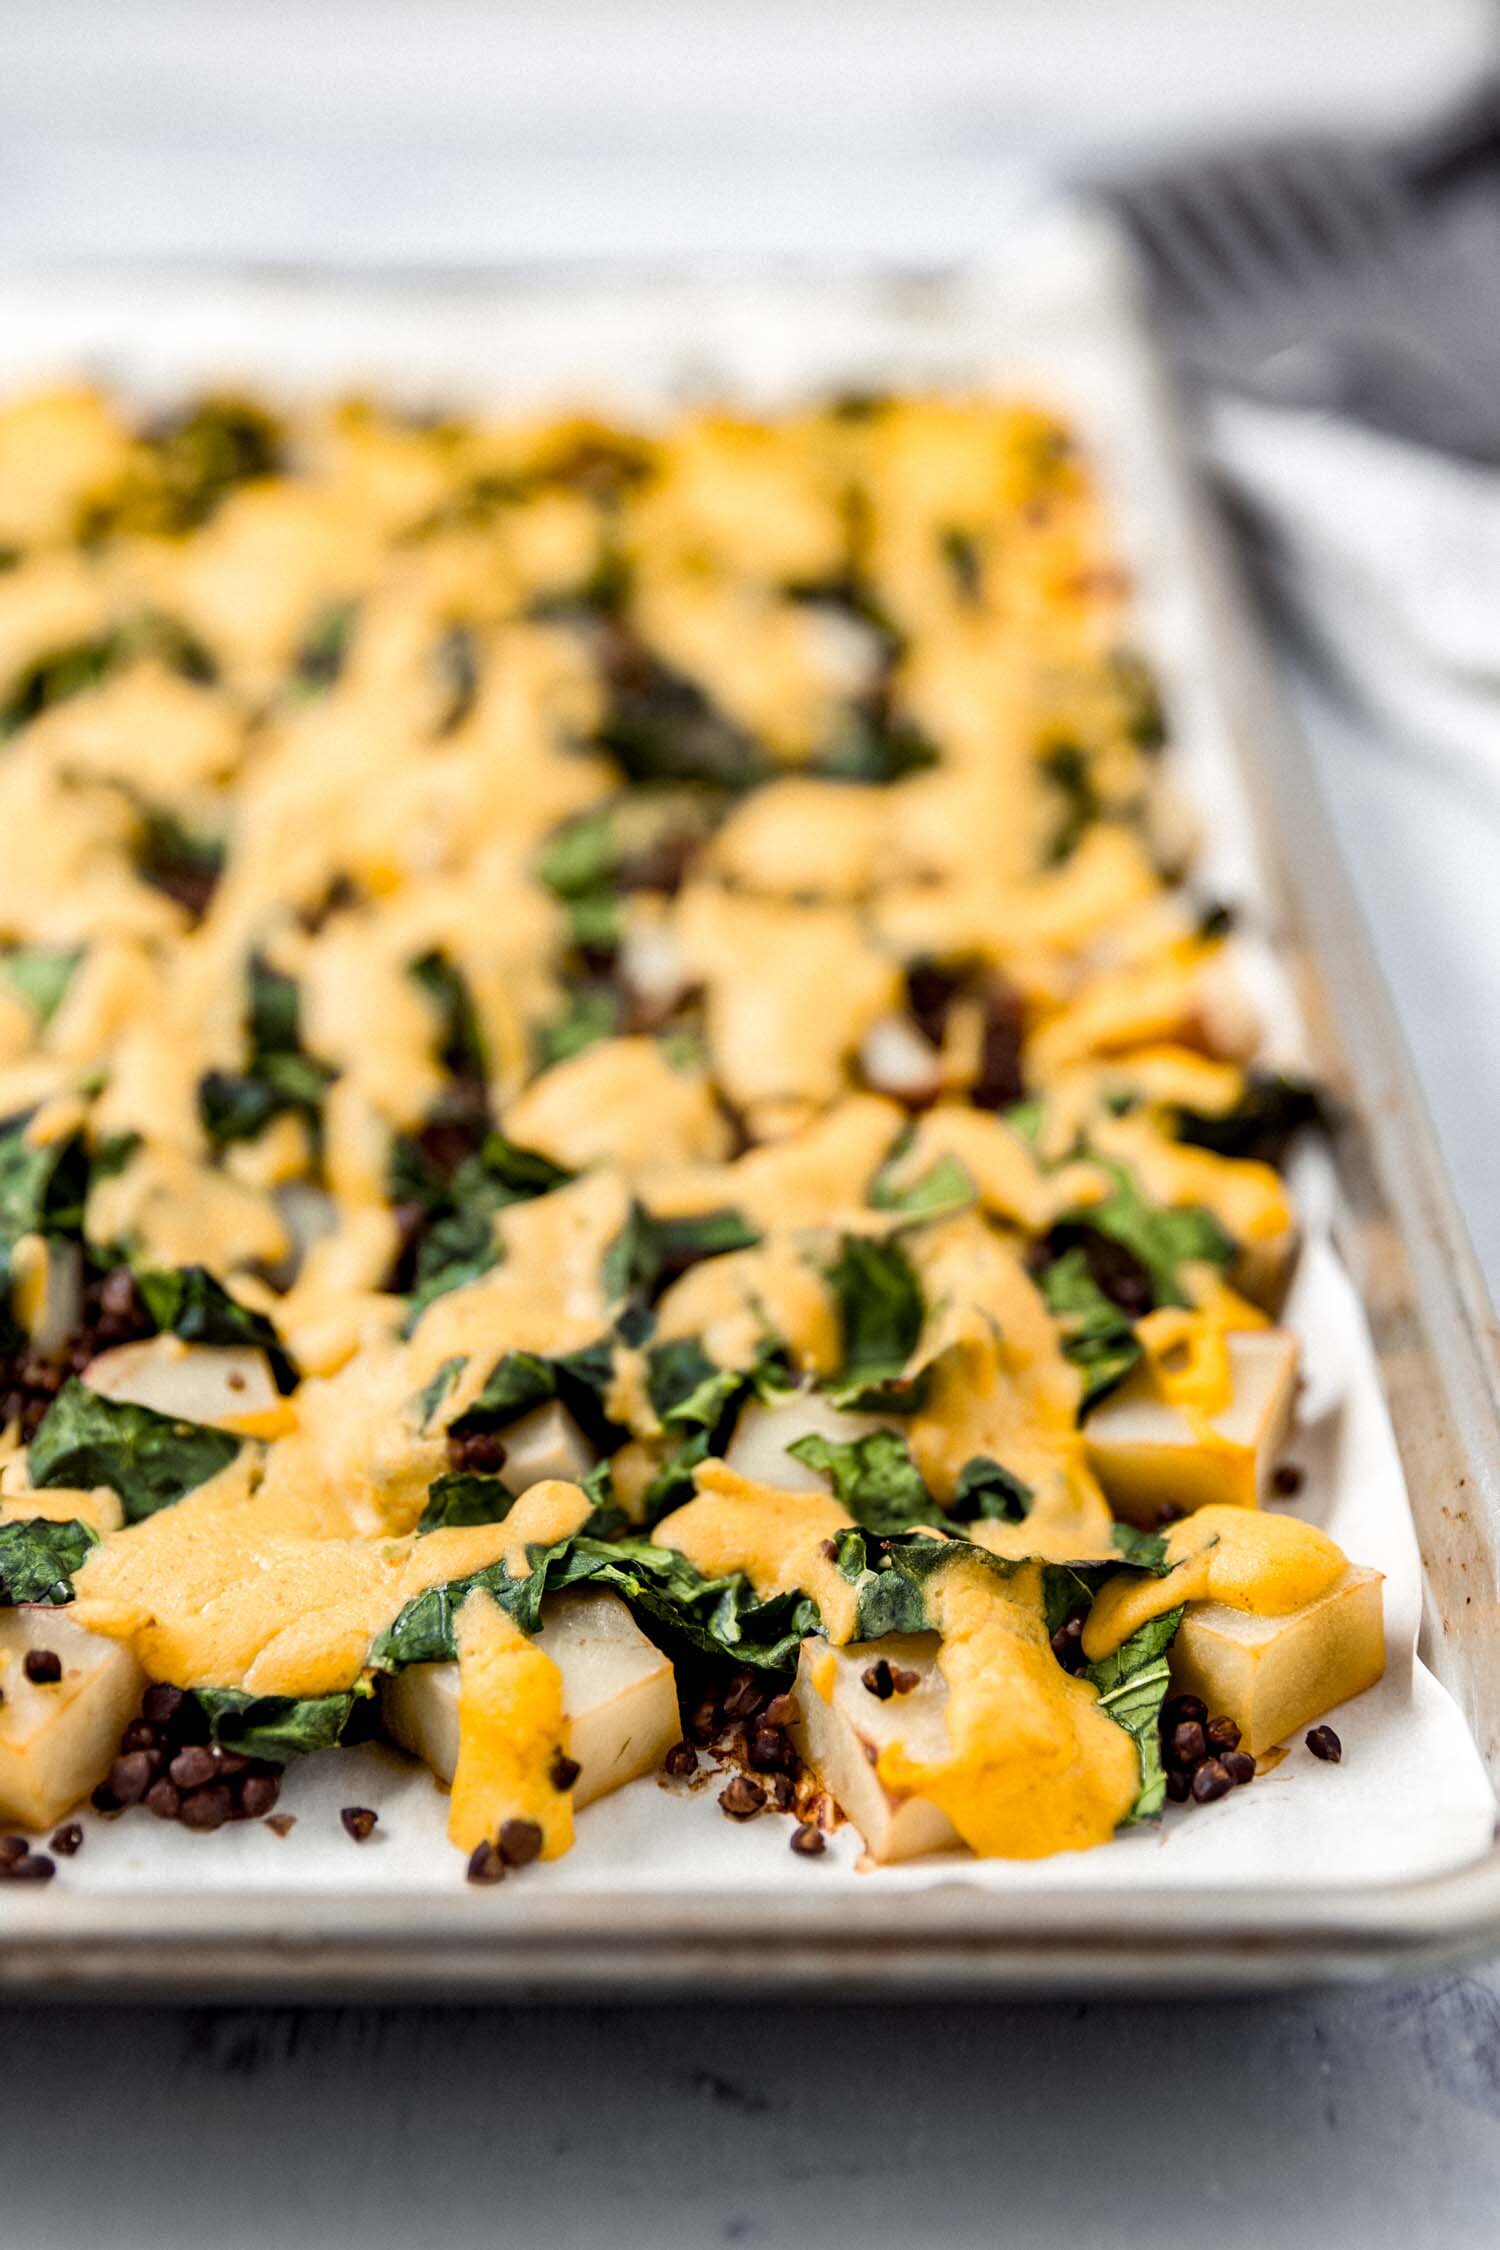 Cheesy Vegan Sheet Pan Potatoes with Greens and Lentils makes a full, satisfying meal. #plantbased #dinner #cheesy #vegan #cheesesauce #wfpb #glutenfree #grainfree #oilfree #greens #kale #collards #lentils #veggies #sheetpan #comfortfood